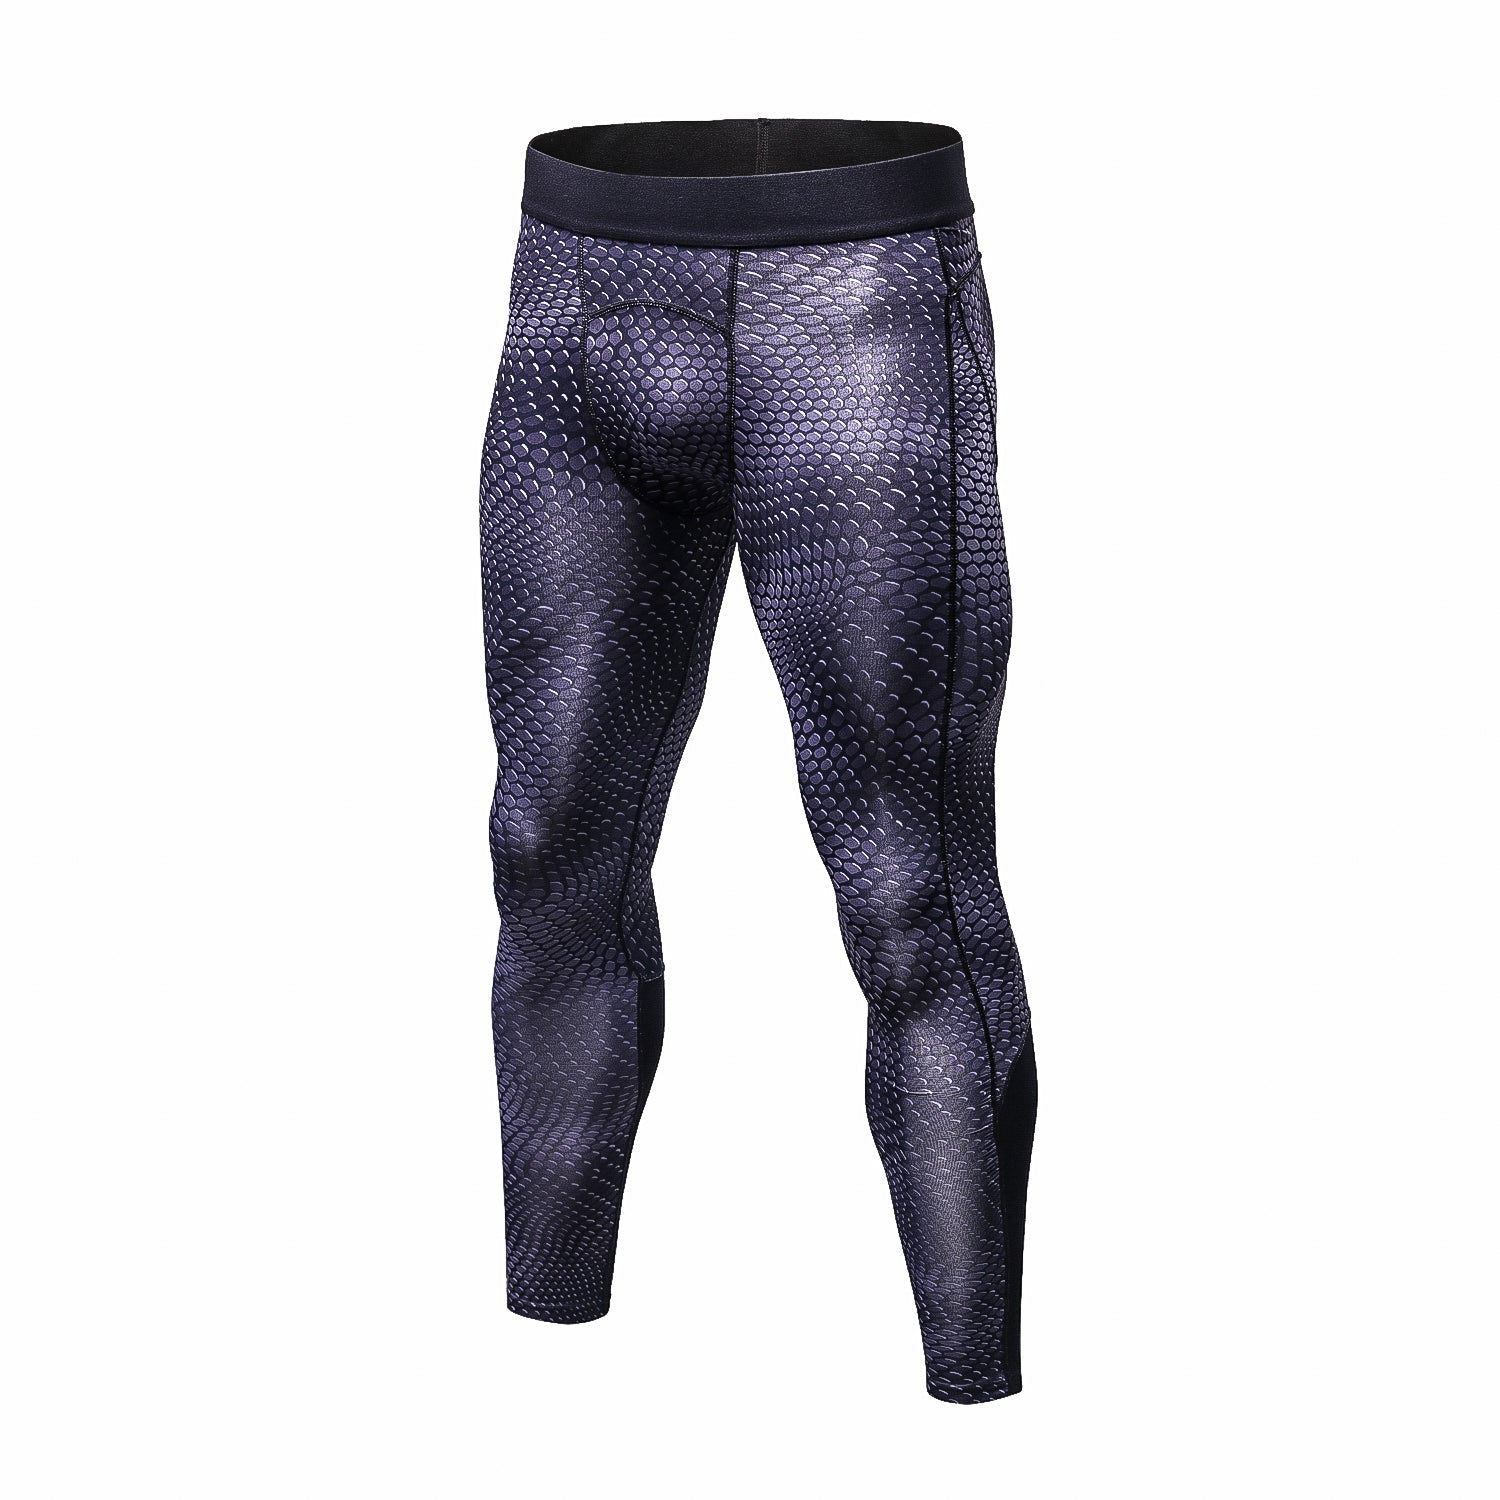 LANBAOSI 3 Pack Men Compression Pants Male Base Layer Tights Leggings Size  Medium 